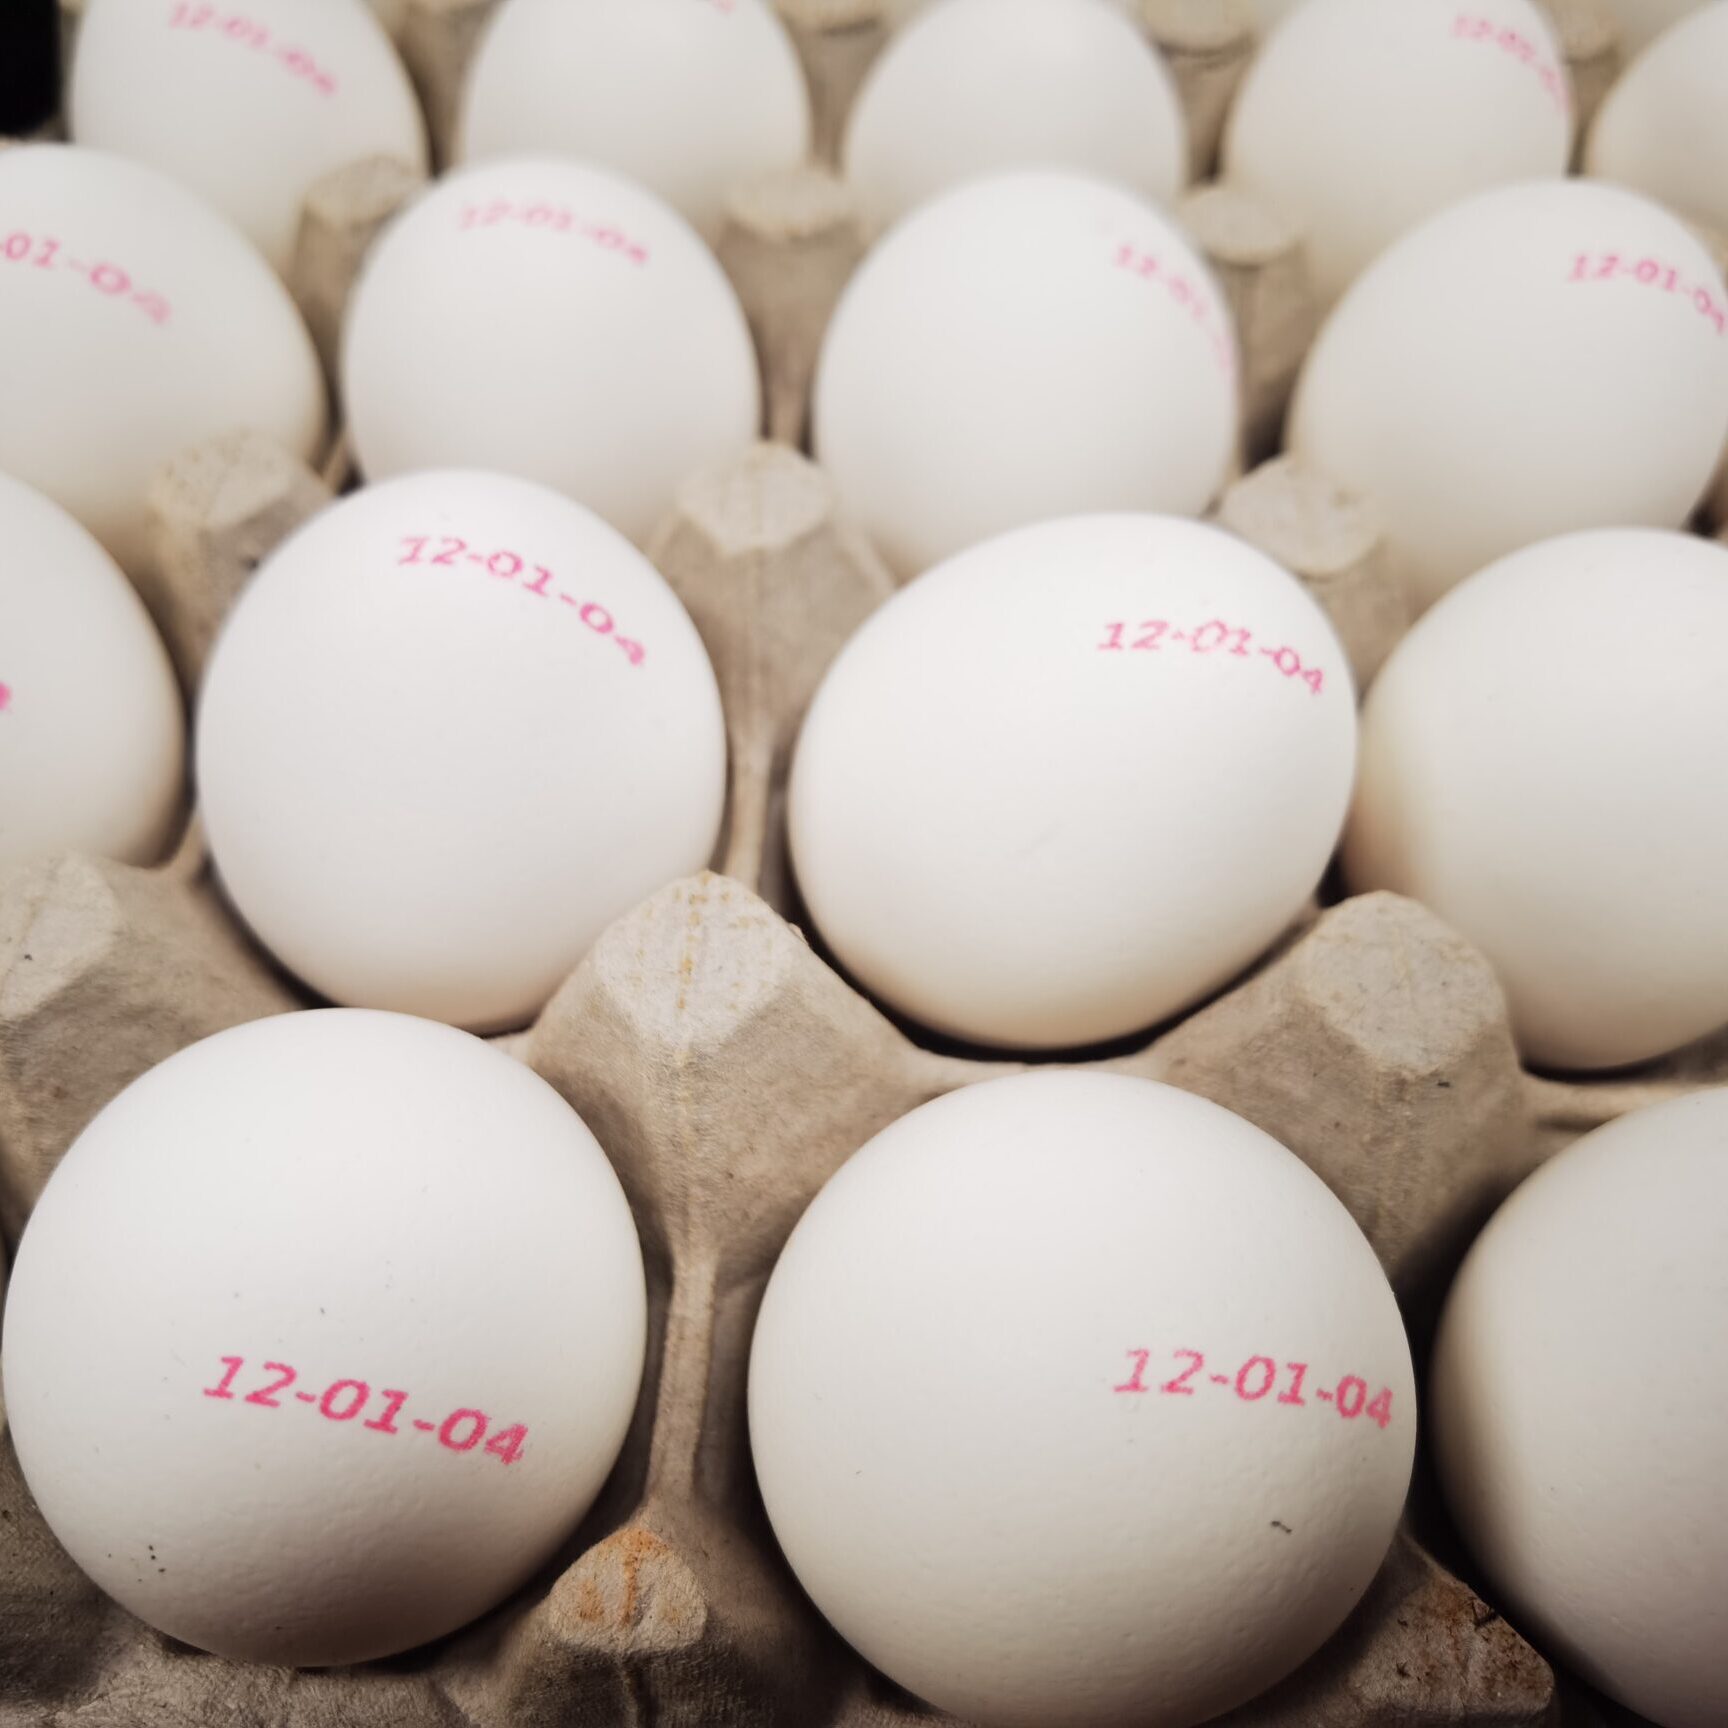 red USDA Approved FDG ink on eggs